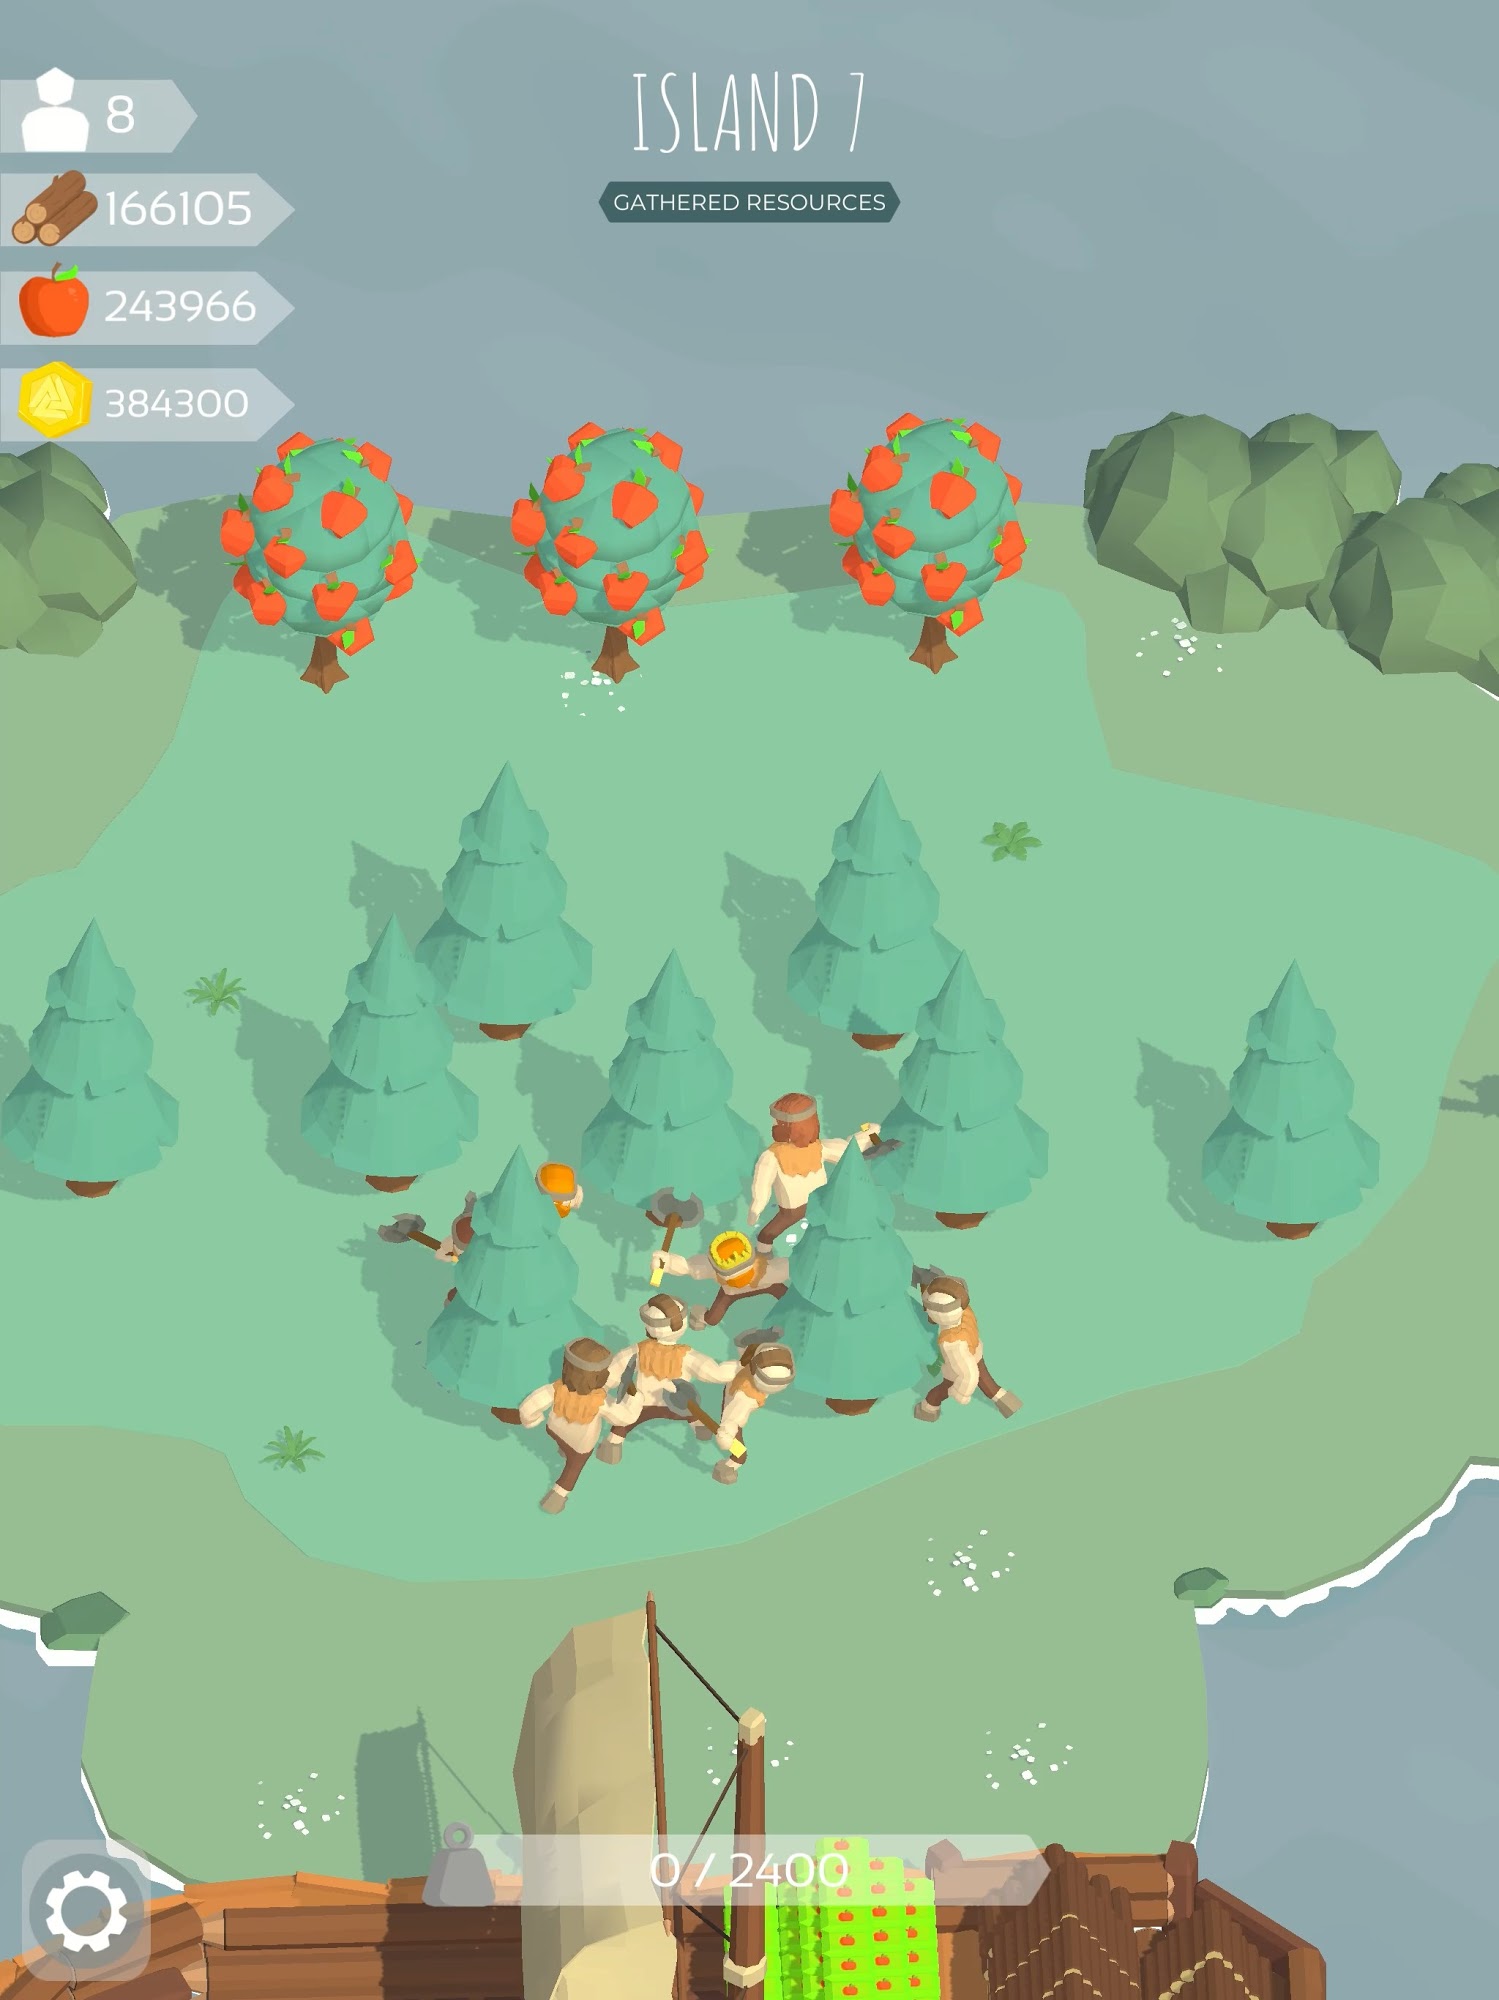 Vikings of Valheim - Android game screenshots.